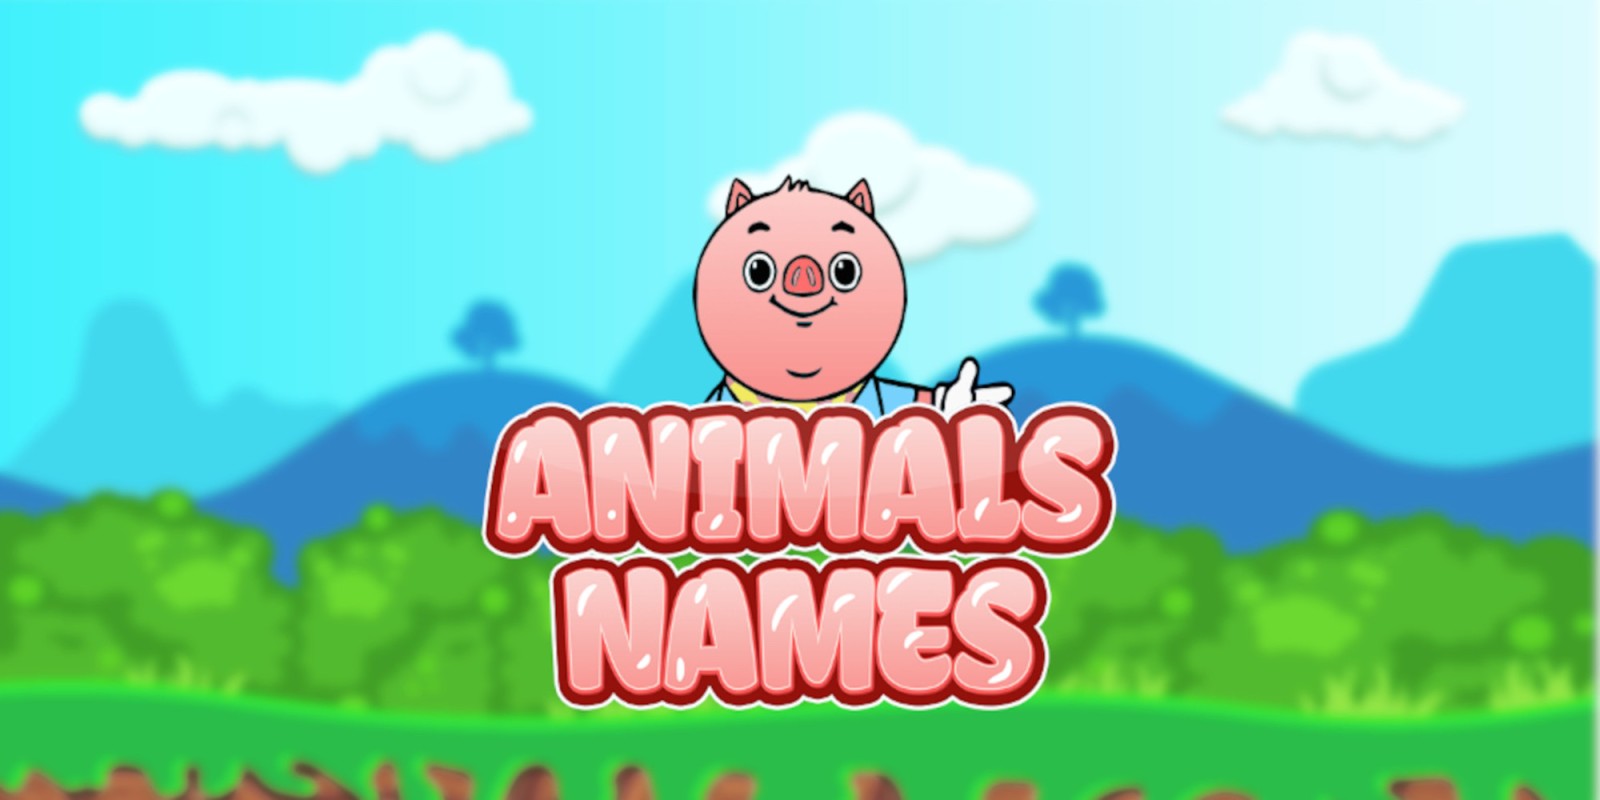 Animals Names | Nintendo Switch download software | Games | Nintendo